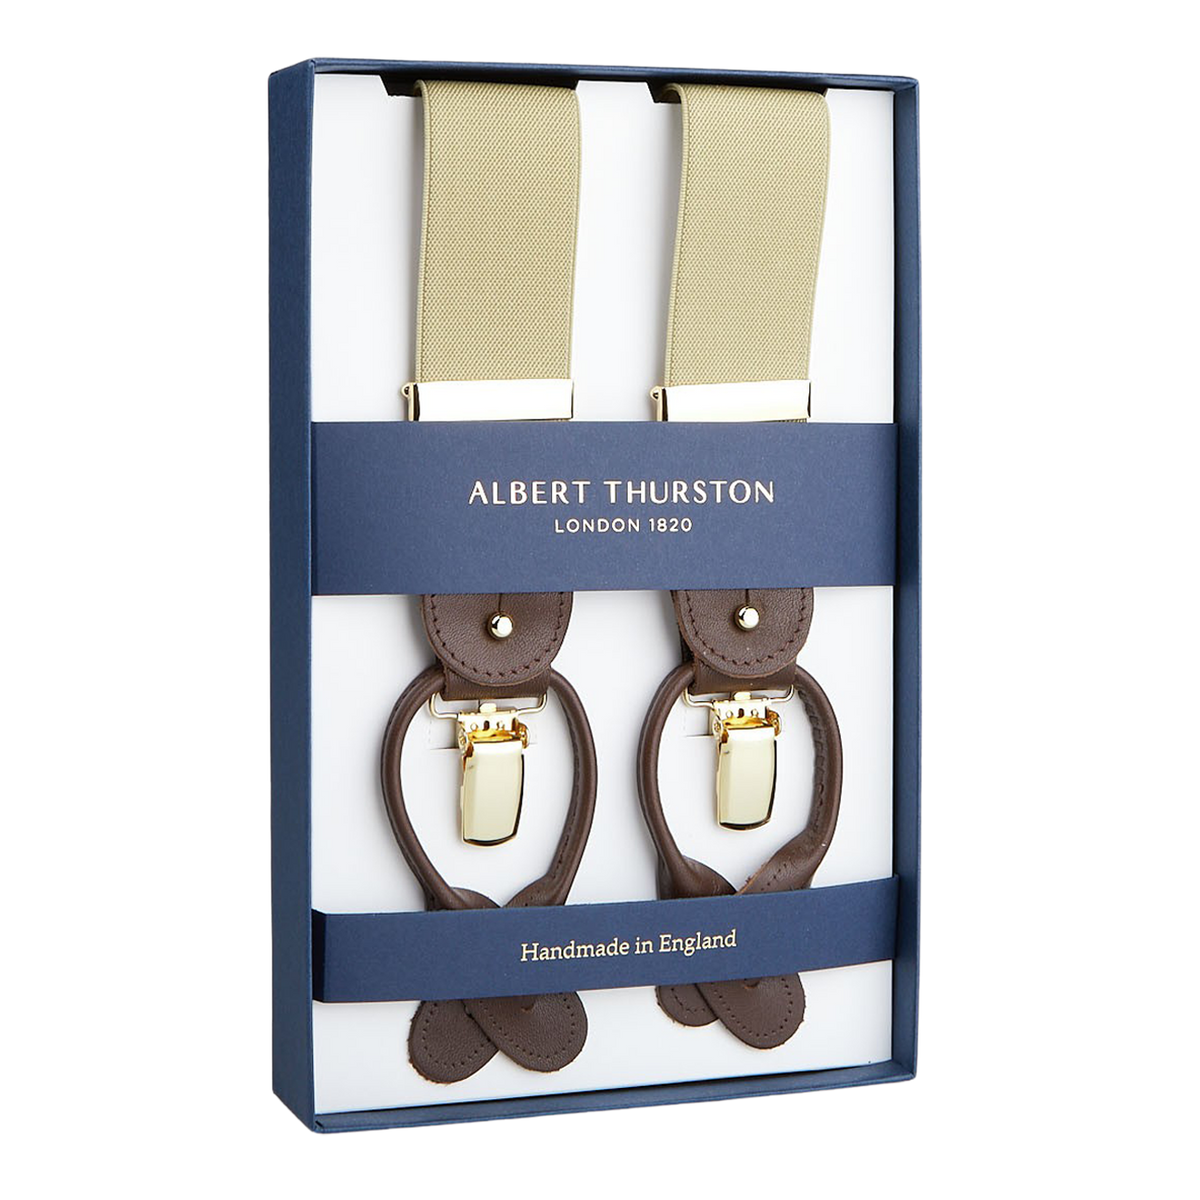 A pair of handmade Albert Thurston Dark Beige Nylon Elastic 35mm braces in a presentation box, highlighting their English craftsmanship.